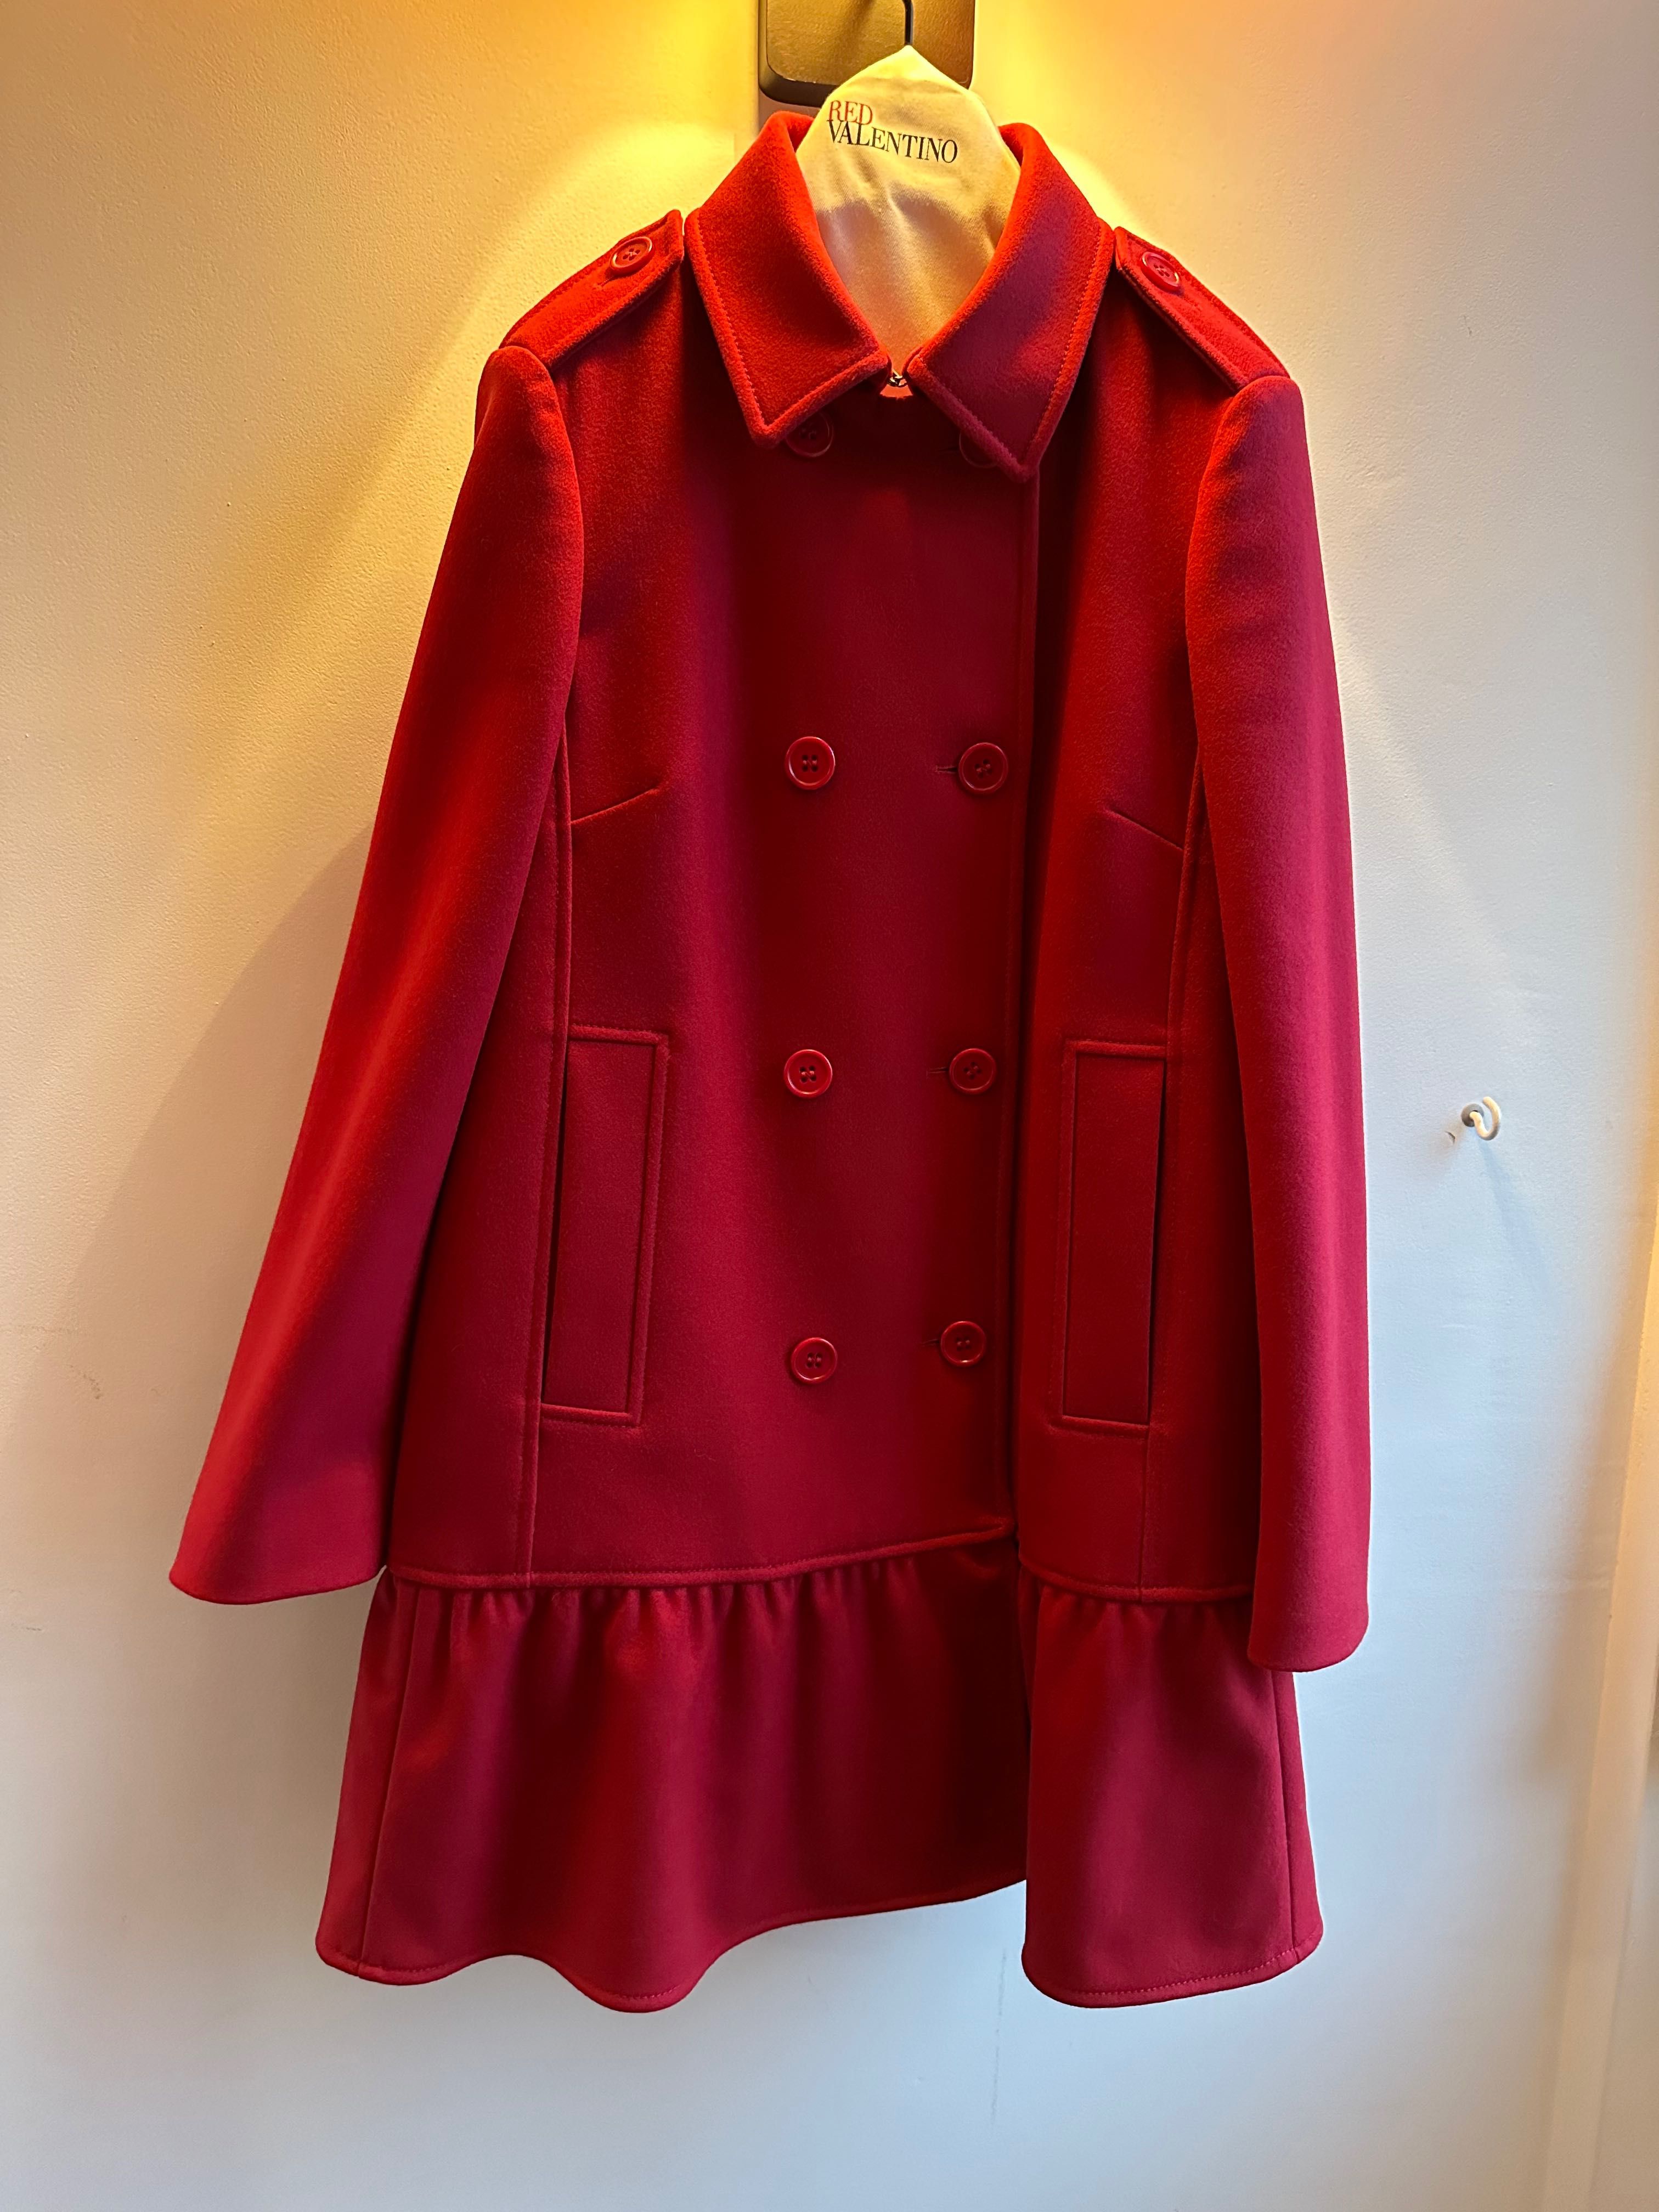 Palton Red Valentino Roz Fuchsia Xs-s